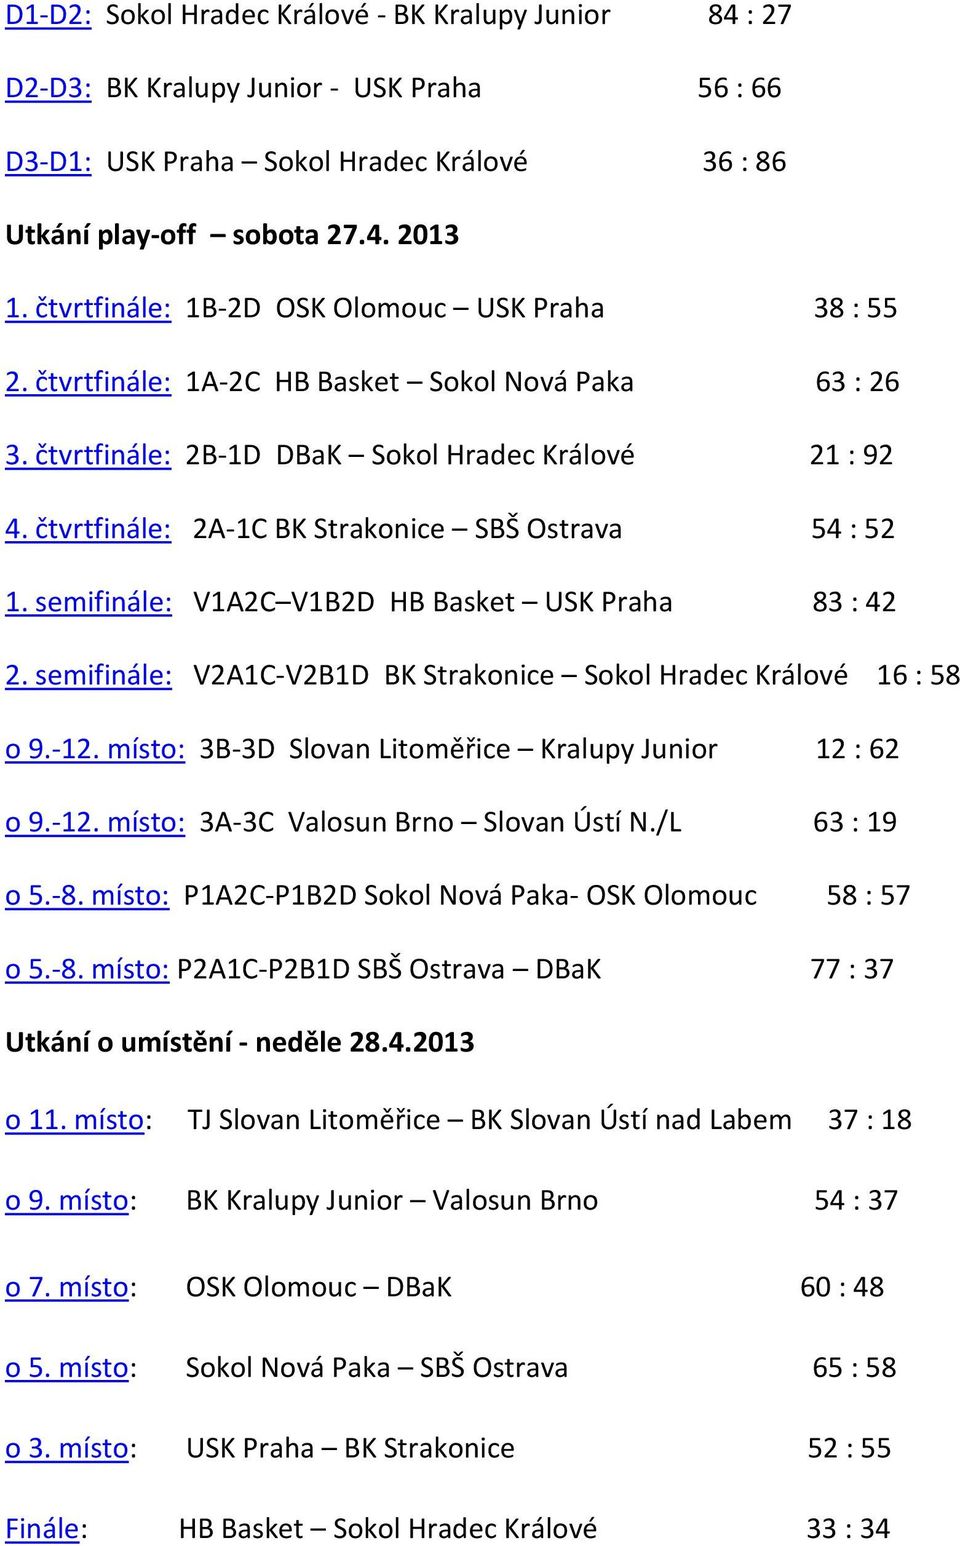 čtvrtfinále: 2A-1C BK Strakonice SBŠ Ostrava 54 : 52 1. semifinále: V1A2C V1B2D HB Basket USK Praha 83 : 42 2. semifinále: V2A1C-V2B1D BK Strakonice Sokol Hradec Králové 16 : 58 o 9.-12.